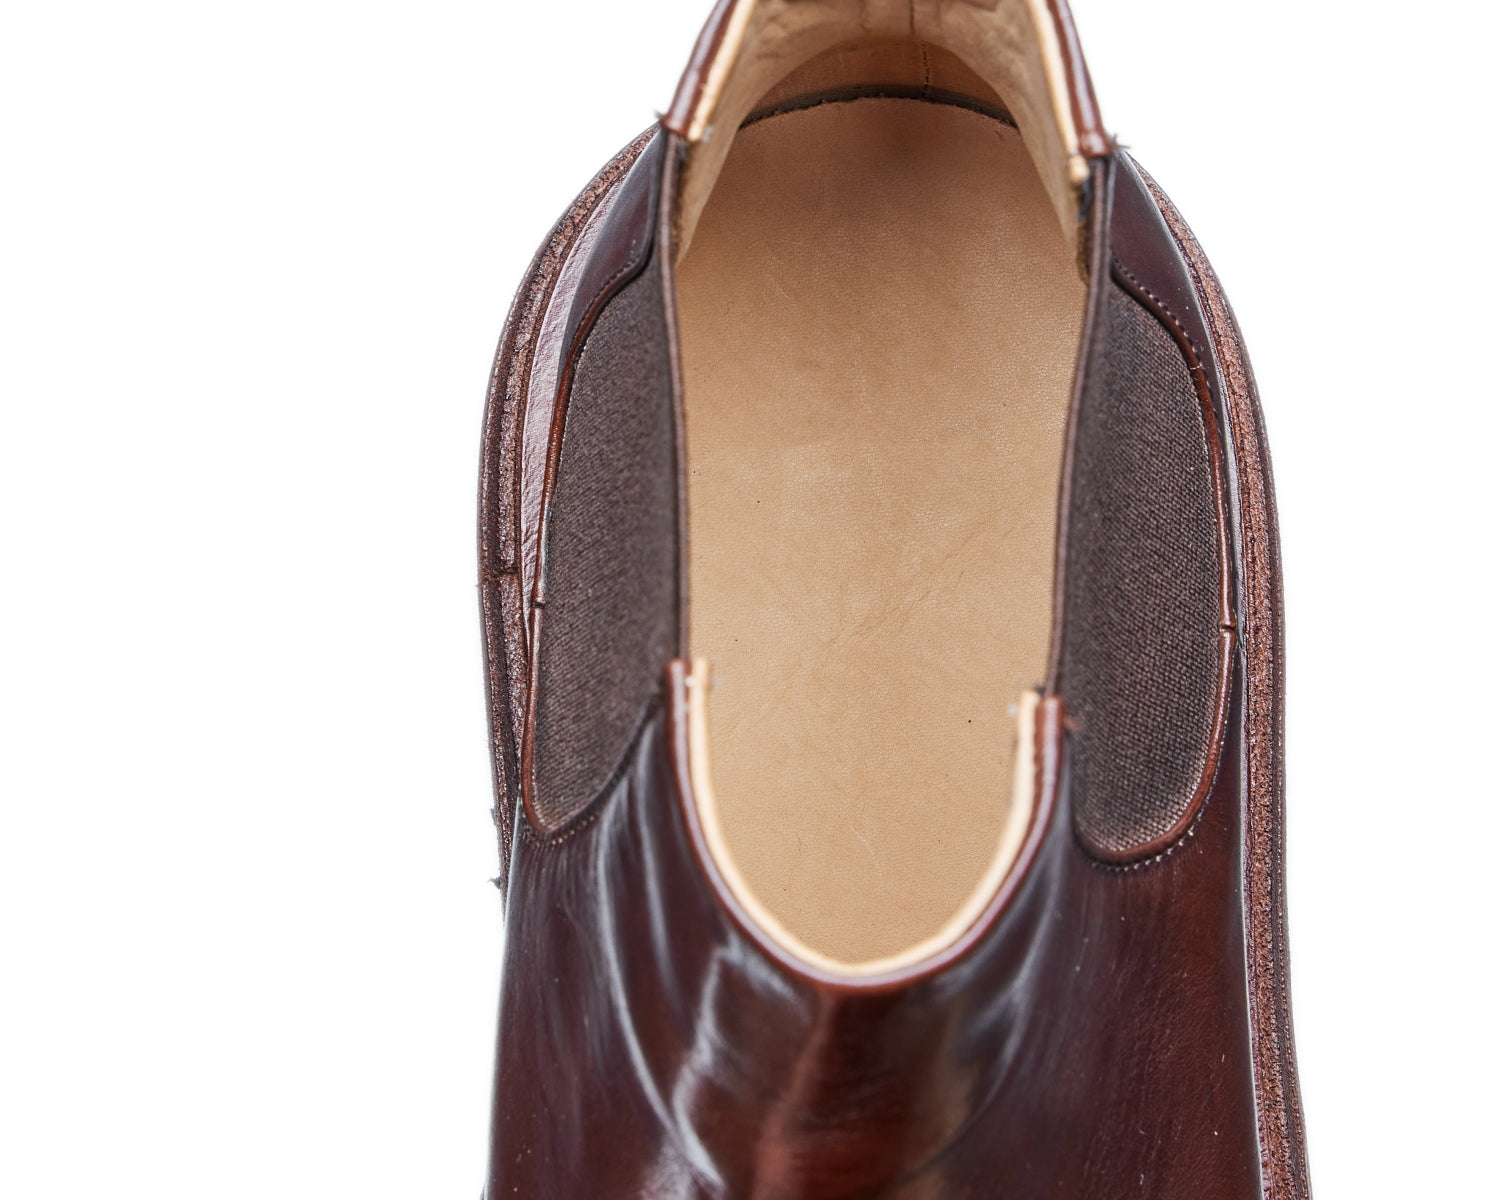 Men's Goodyear welt horsehide full-grain leather Chelsea boots in various styles8